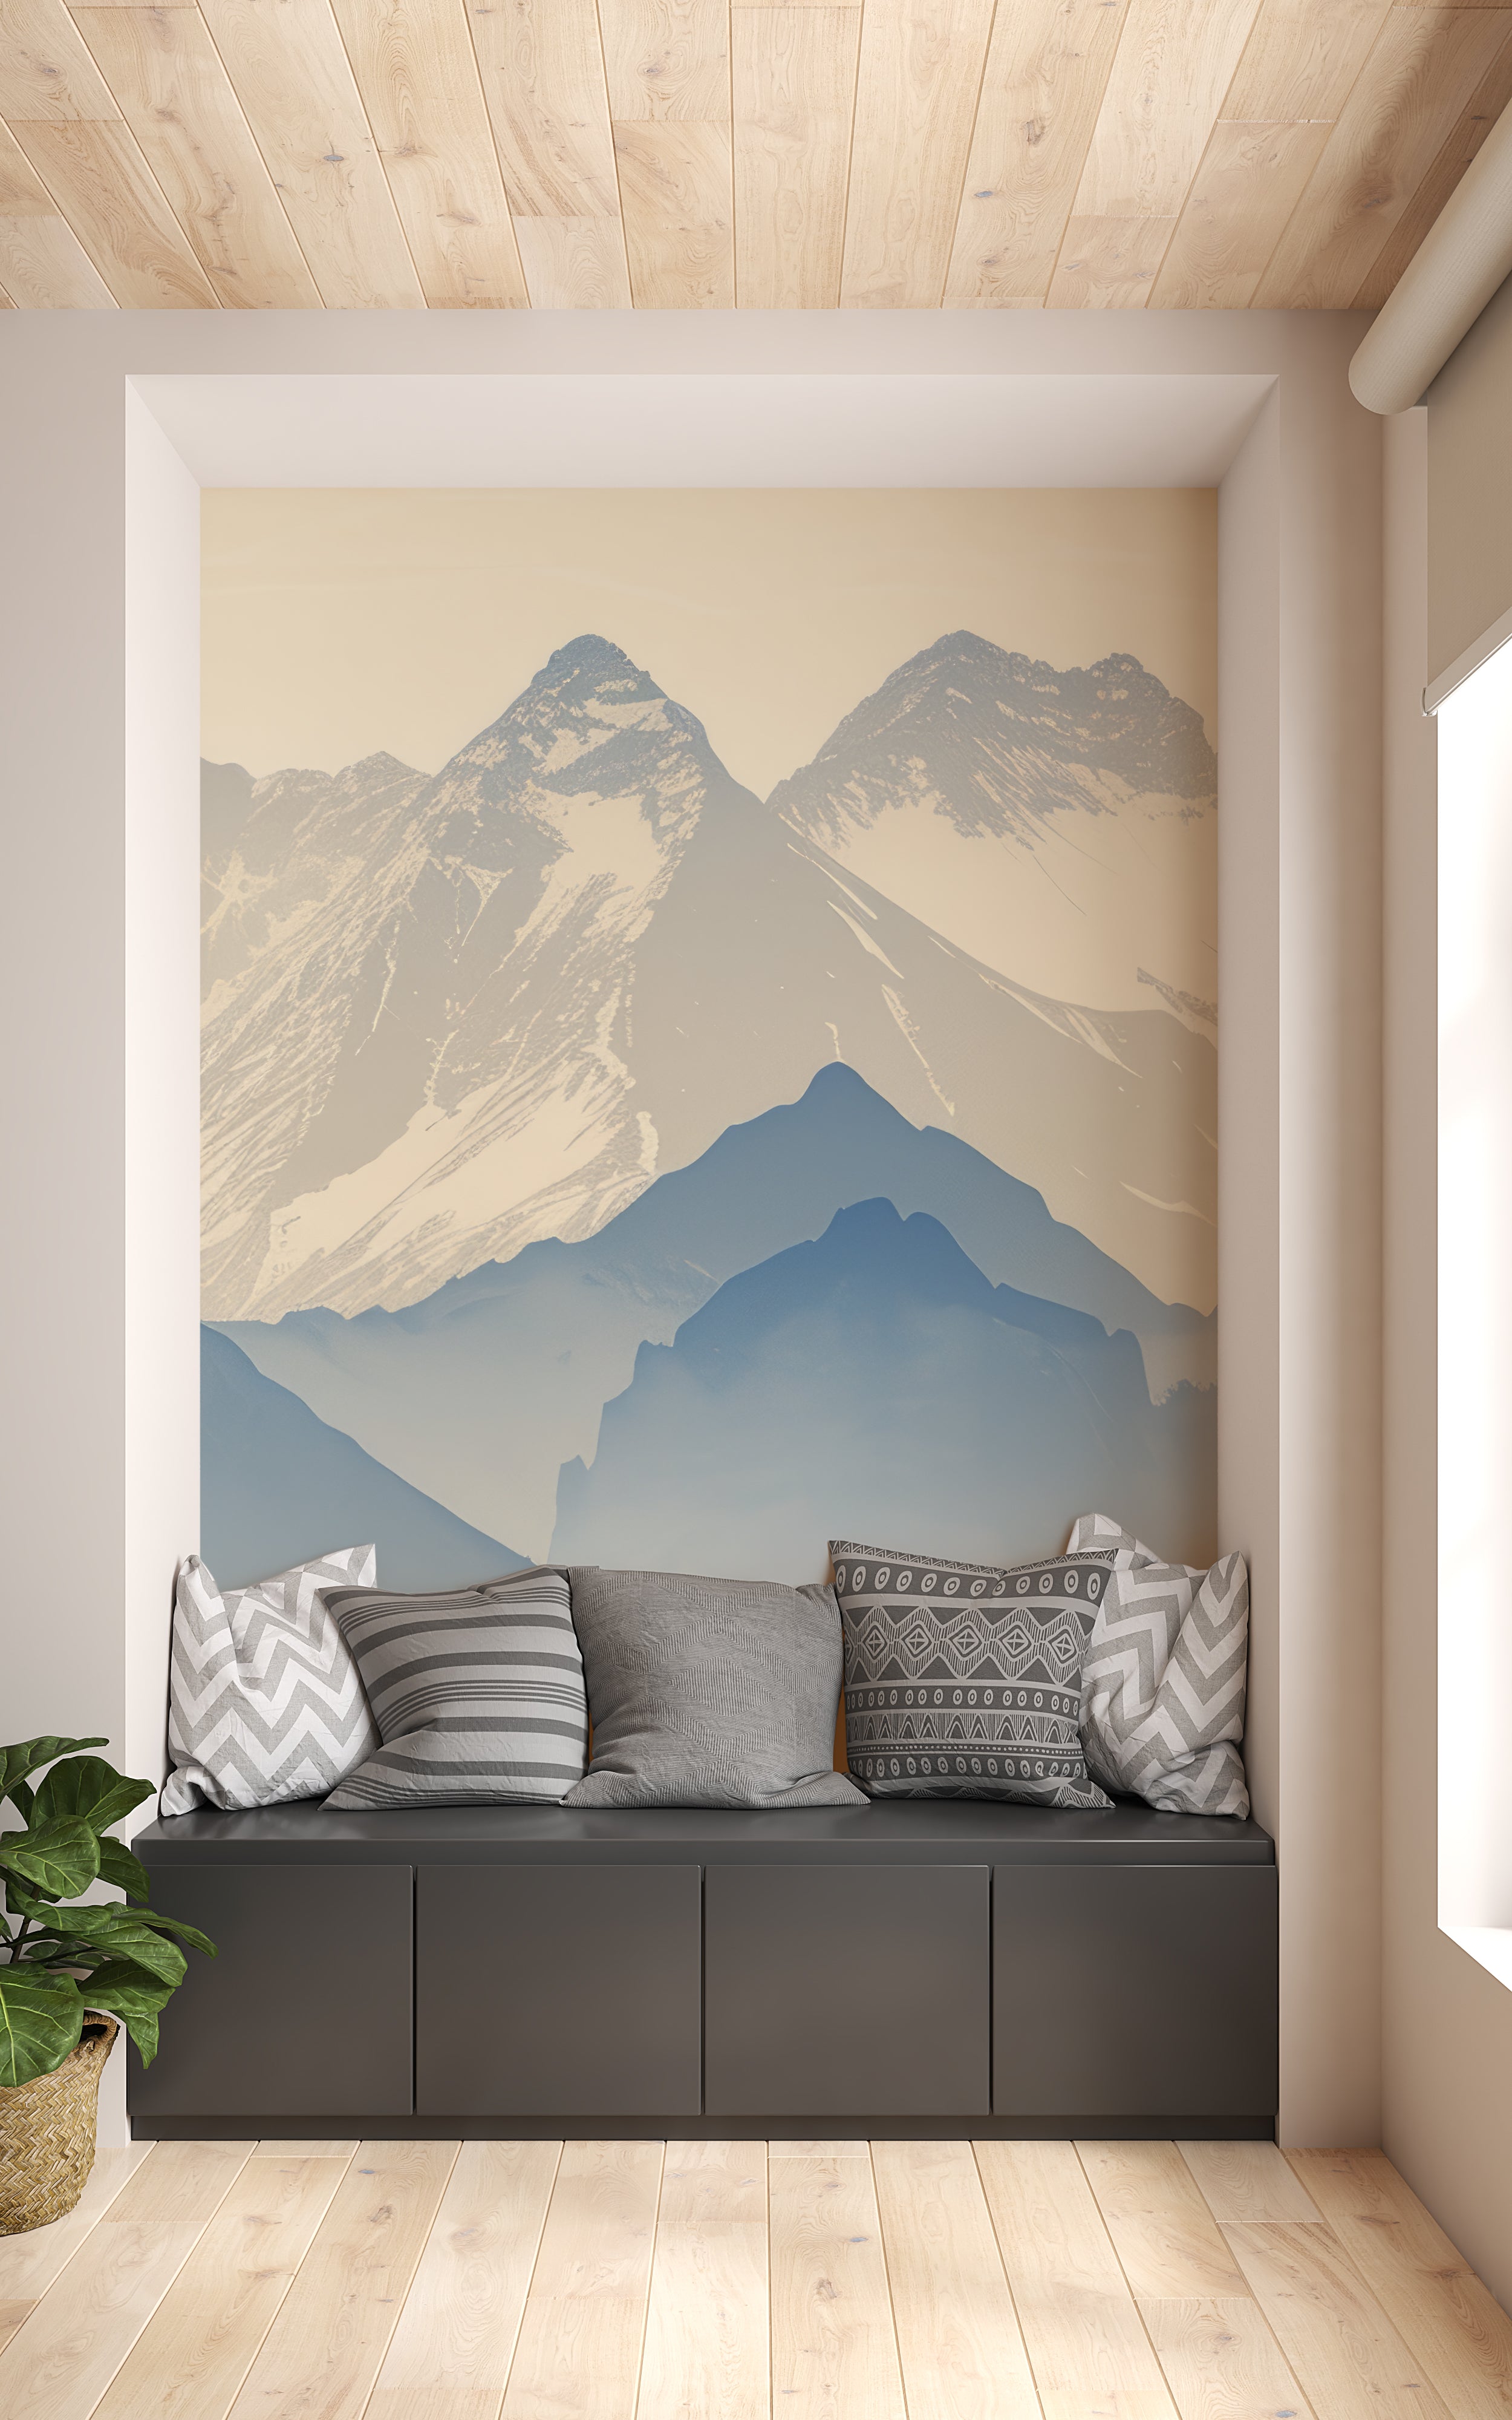 Erhabene Alpen: Panoramatapete von Berggipfeln